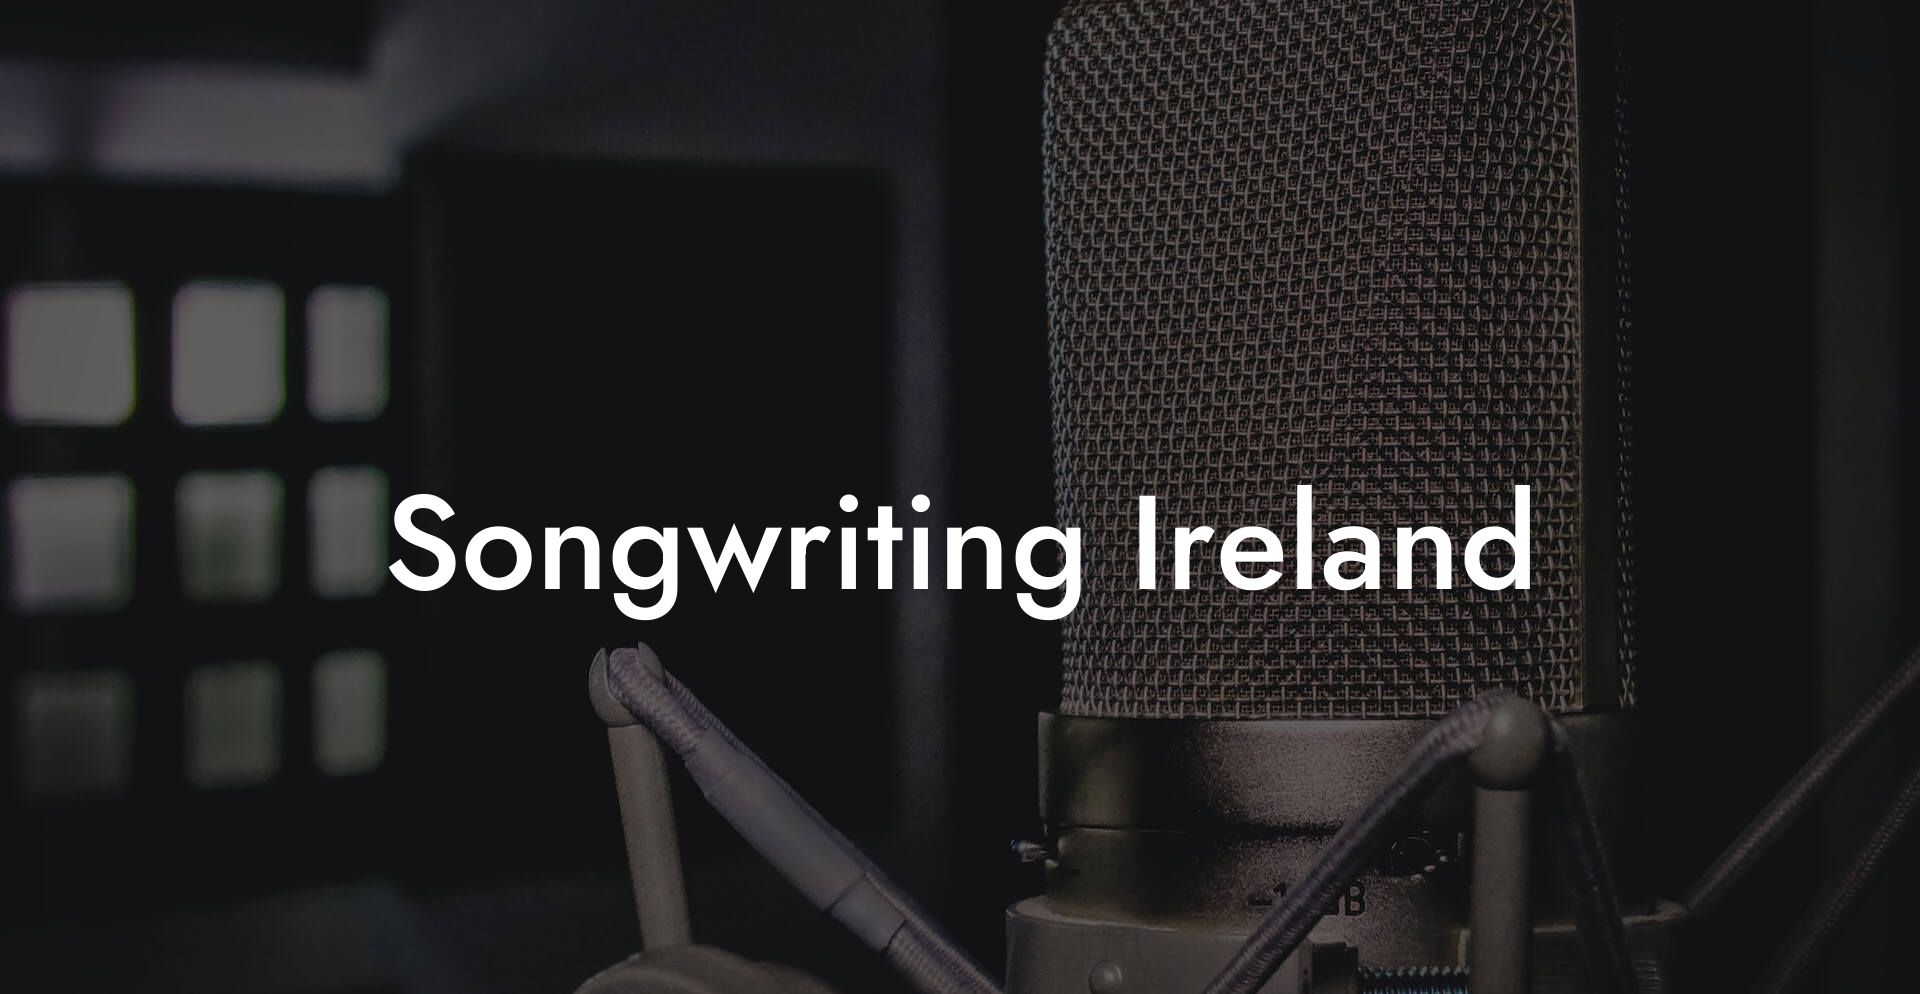 songwriting ireland lyric assistant